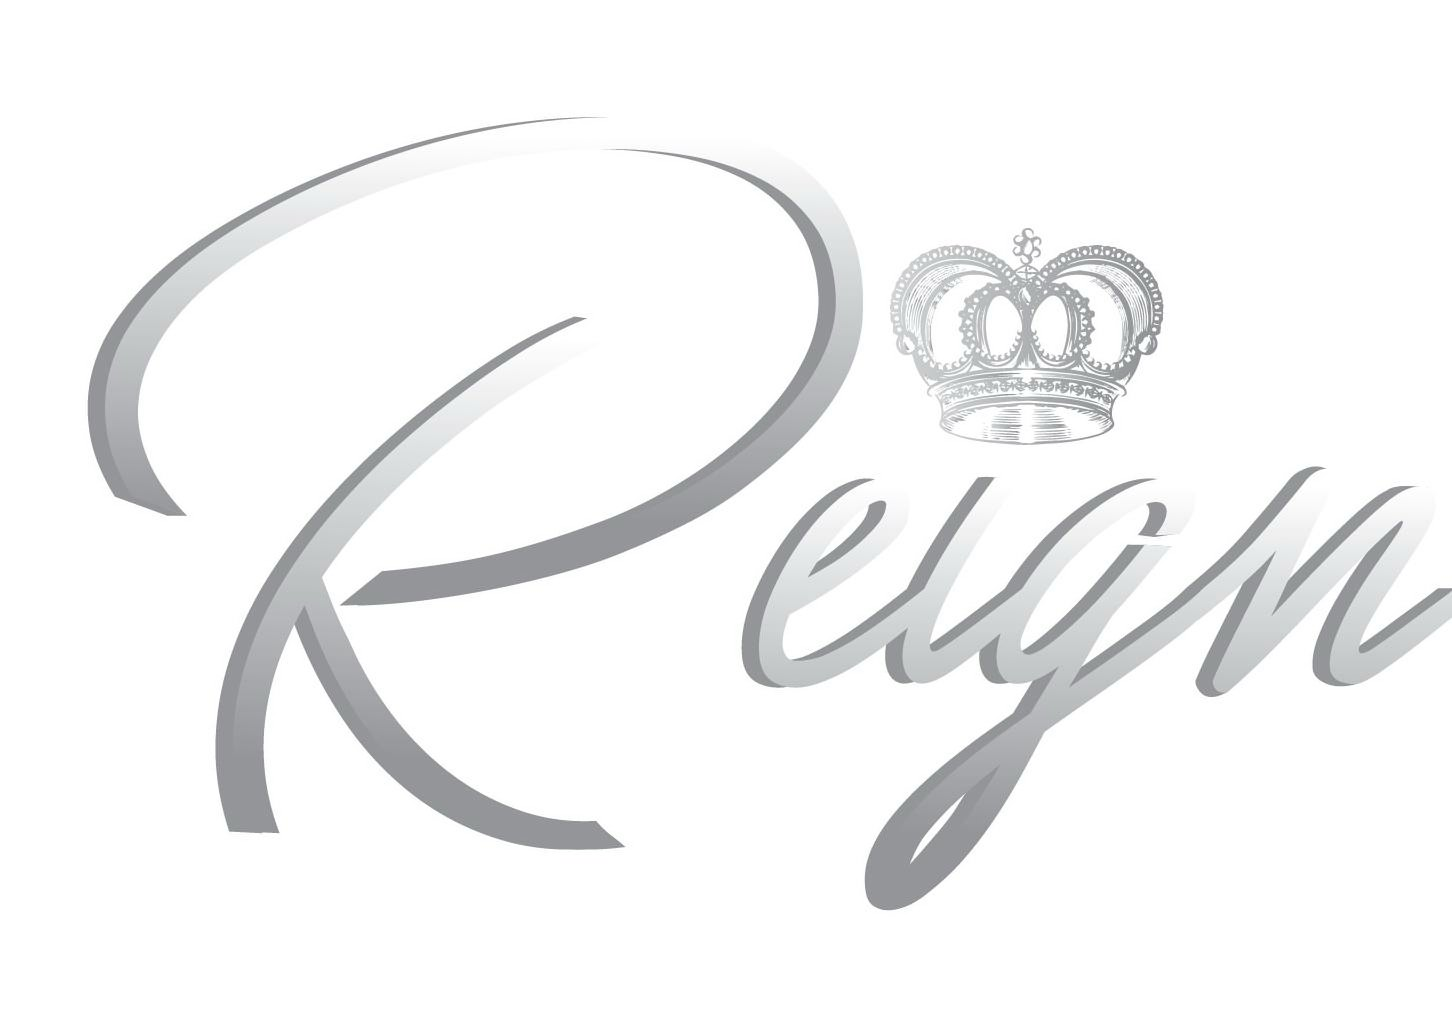 Trademark Logo REIGN